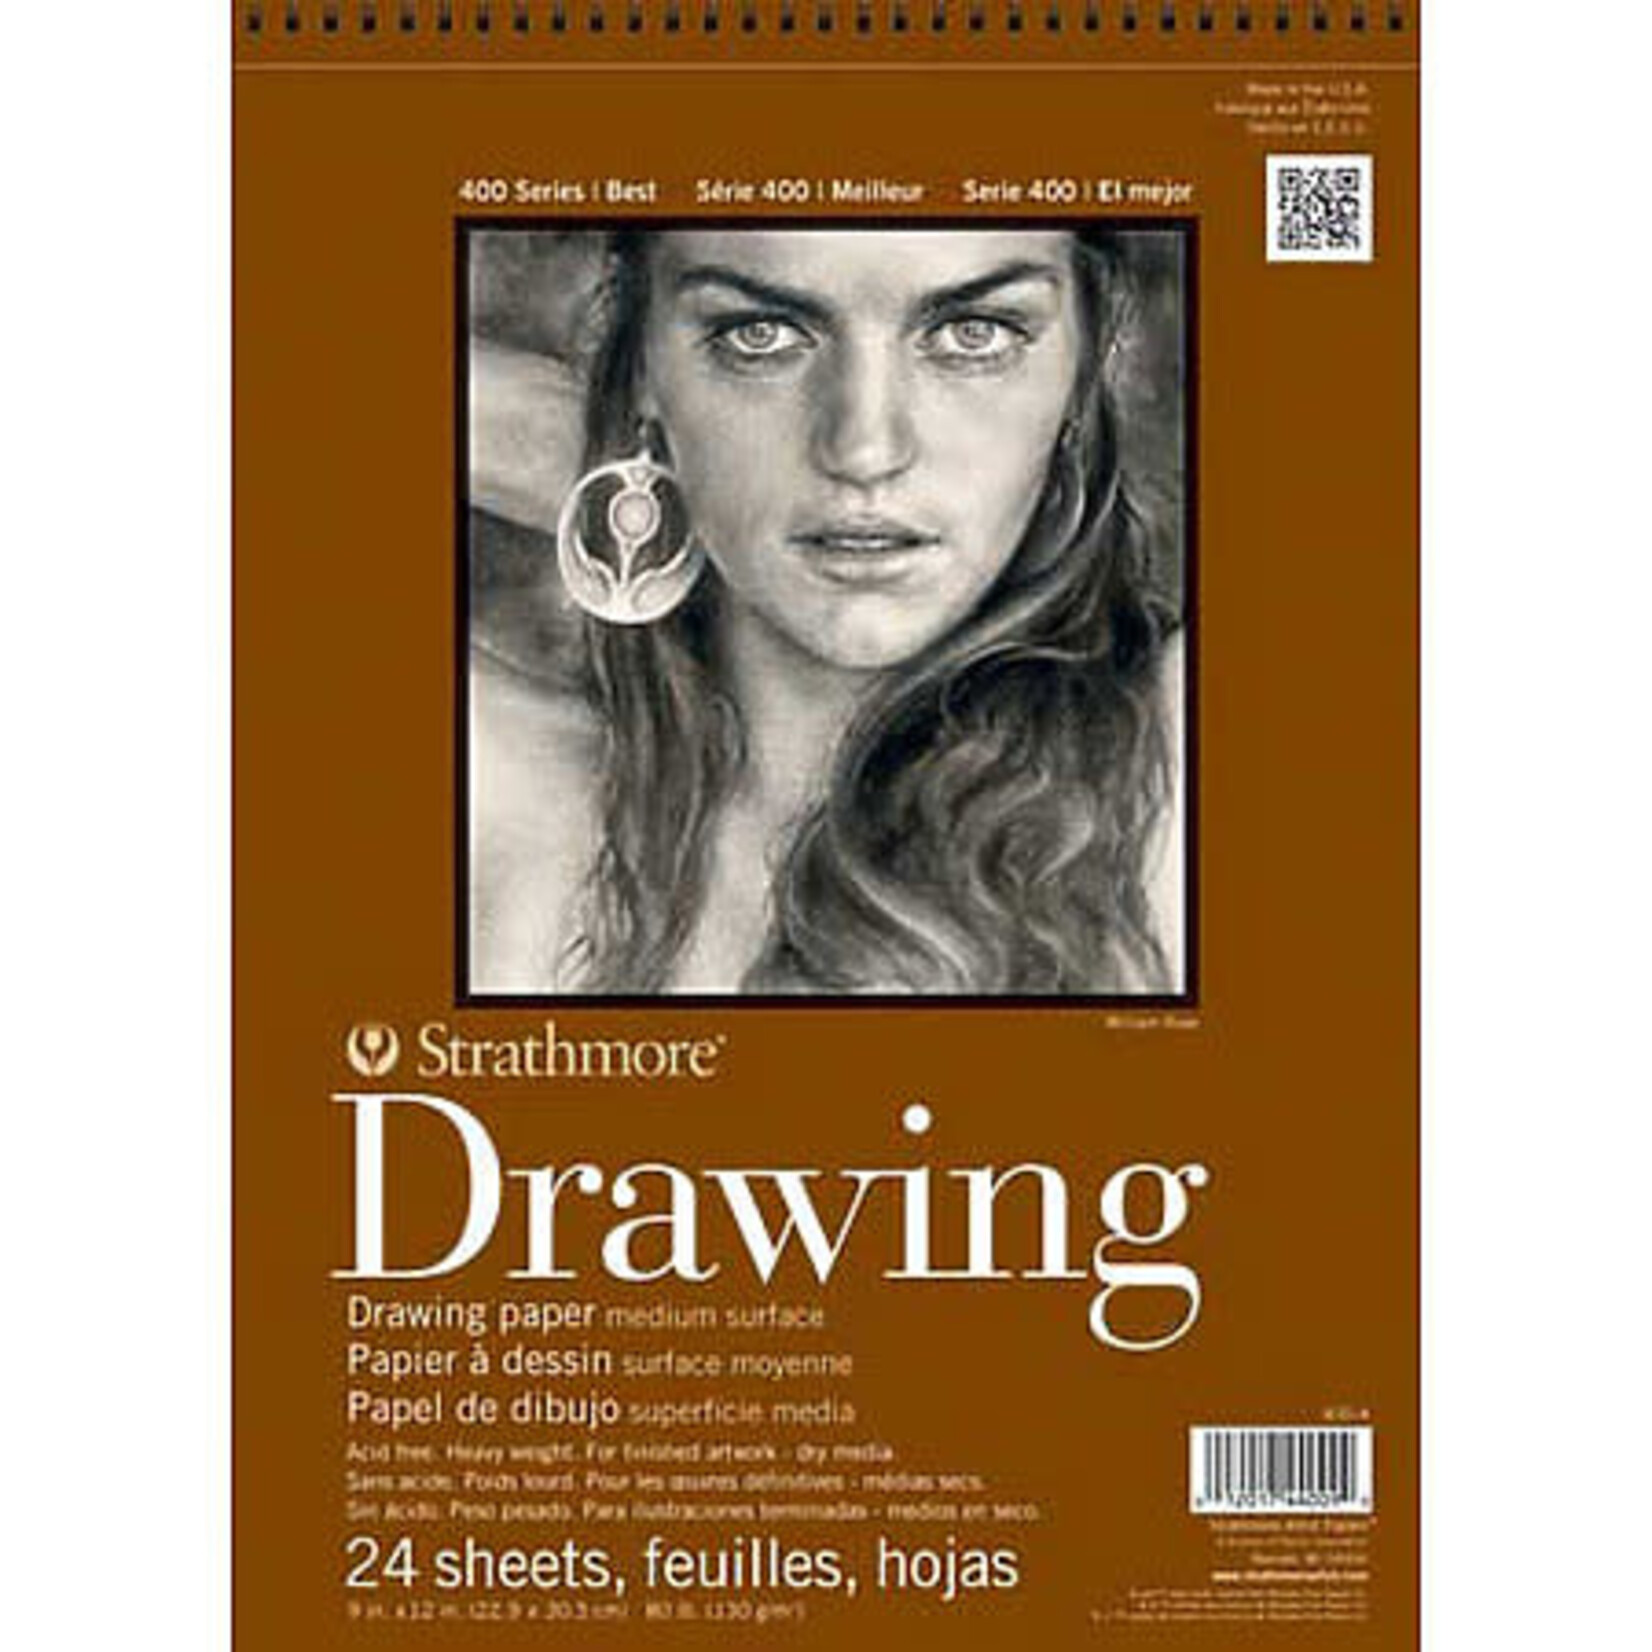 Strathmore Drawing Paper Pads 400 Series, Medium Surface, 12'' x 18''